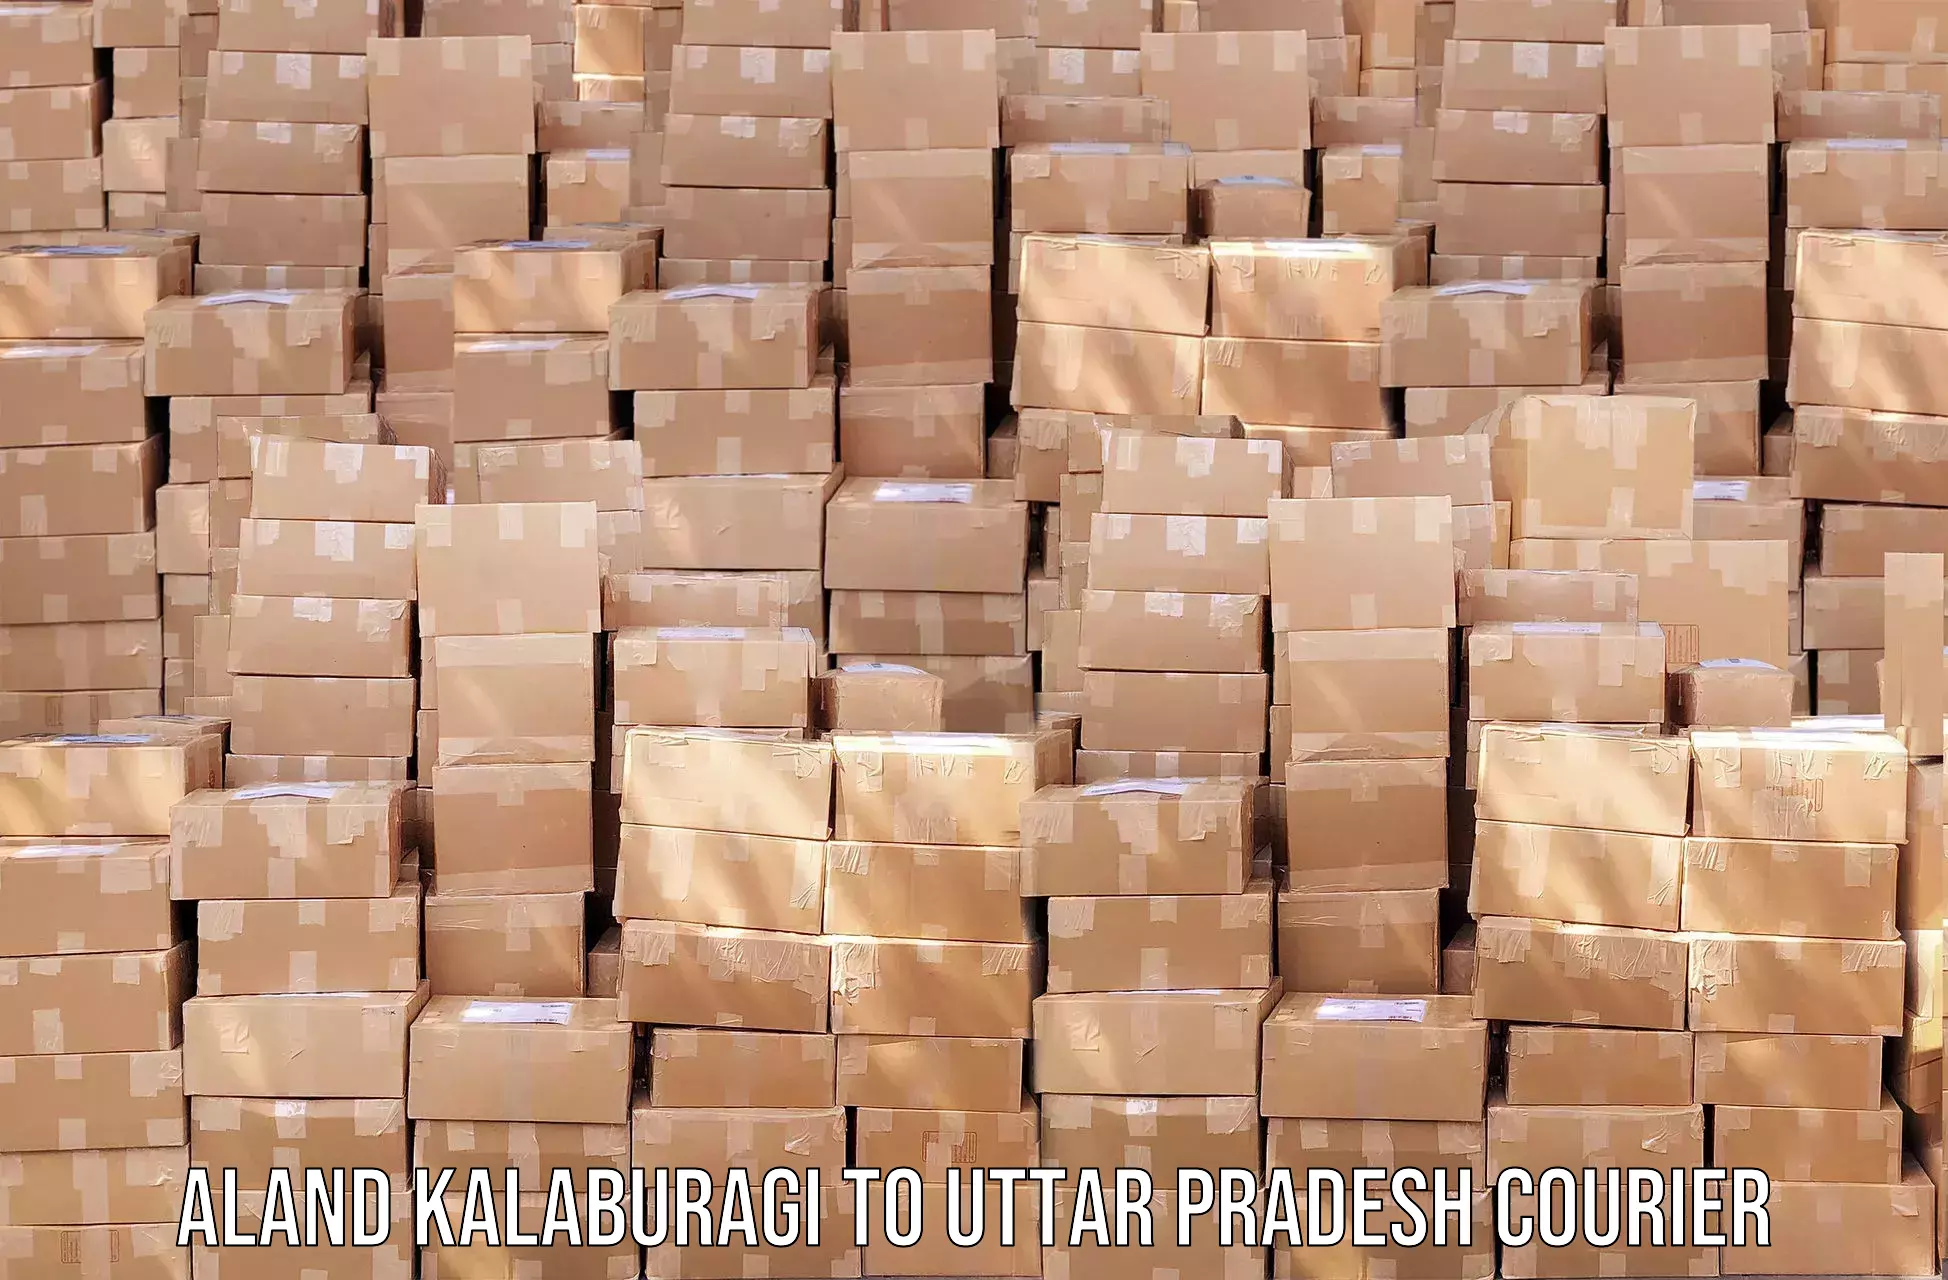 Express mail service Aland Kalaburagi to Uttar Pradesh